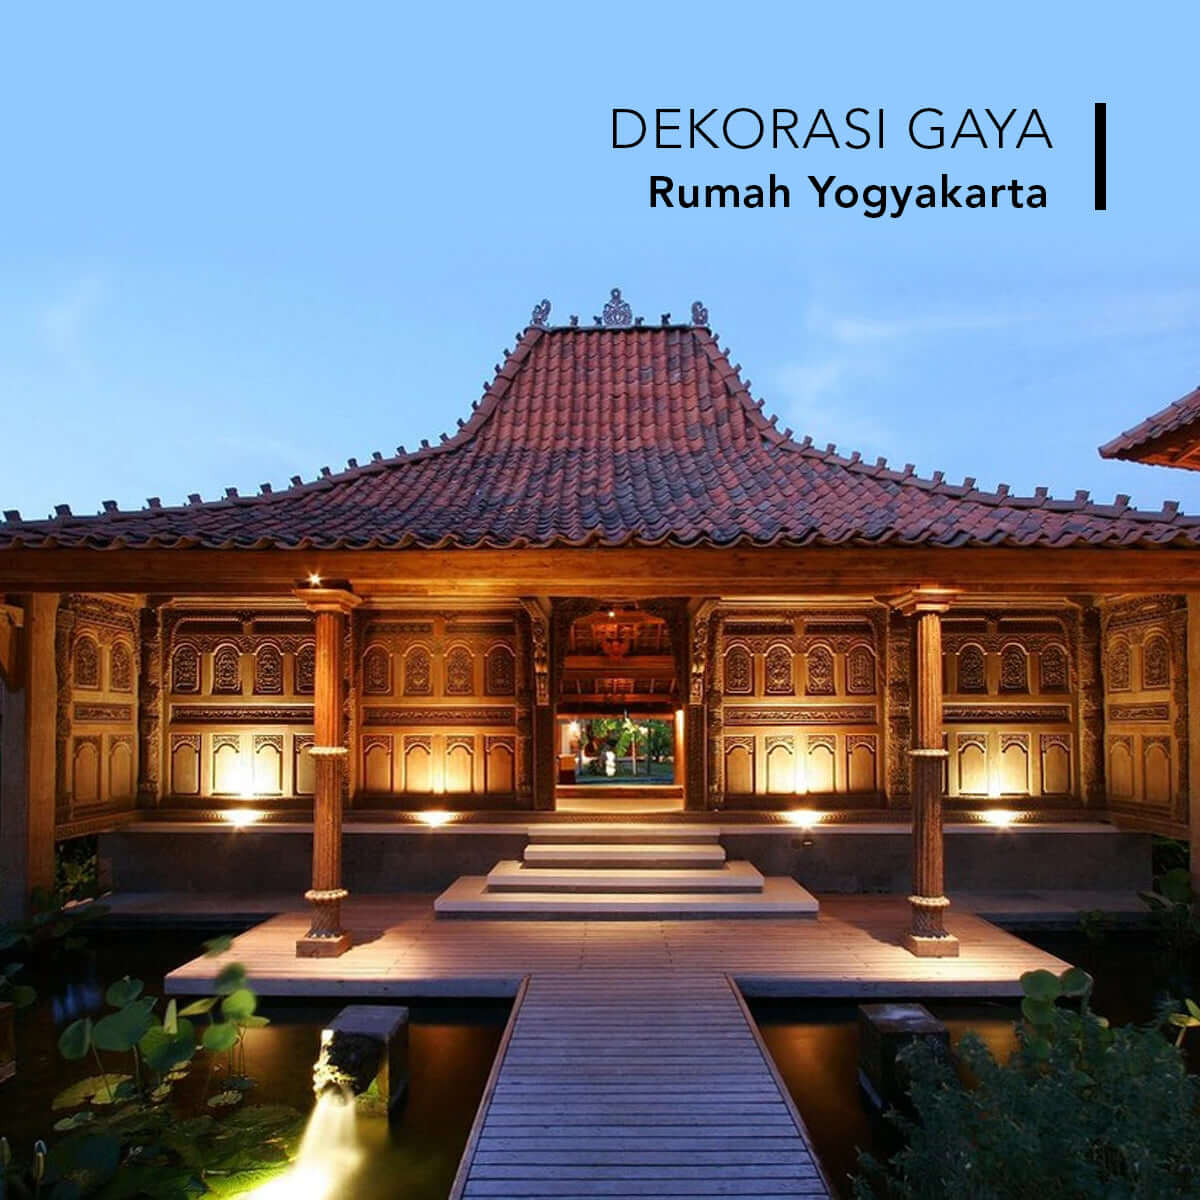 Dekorasi Gaya Rumah Yogyakarta